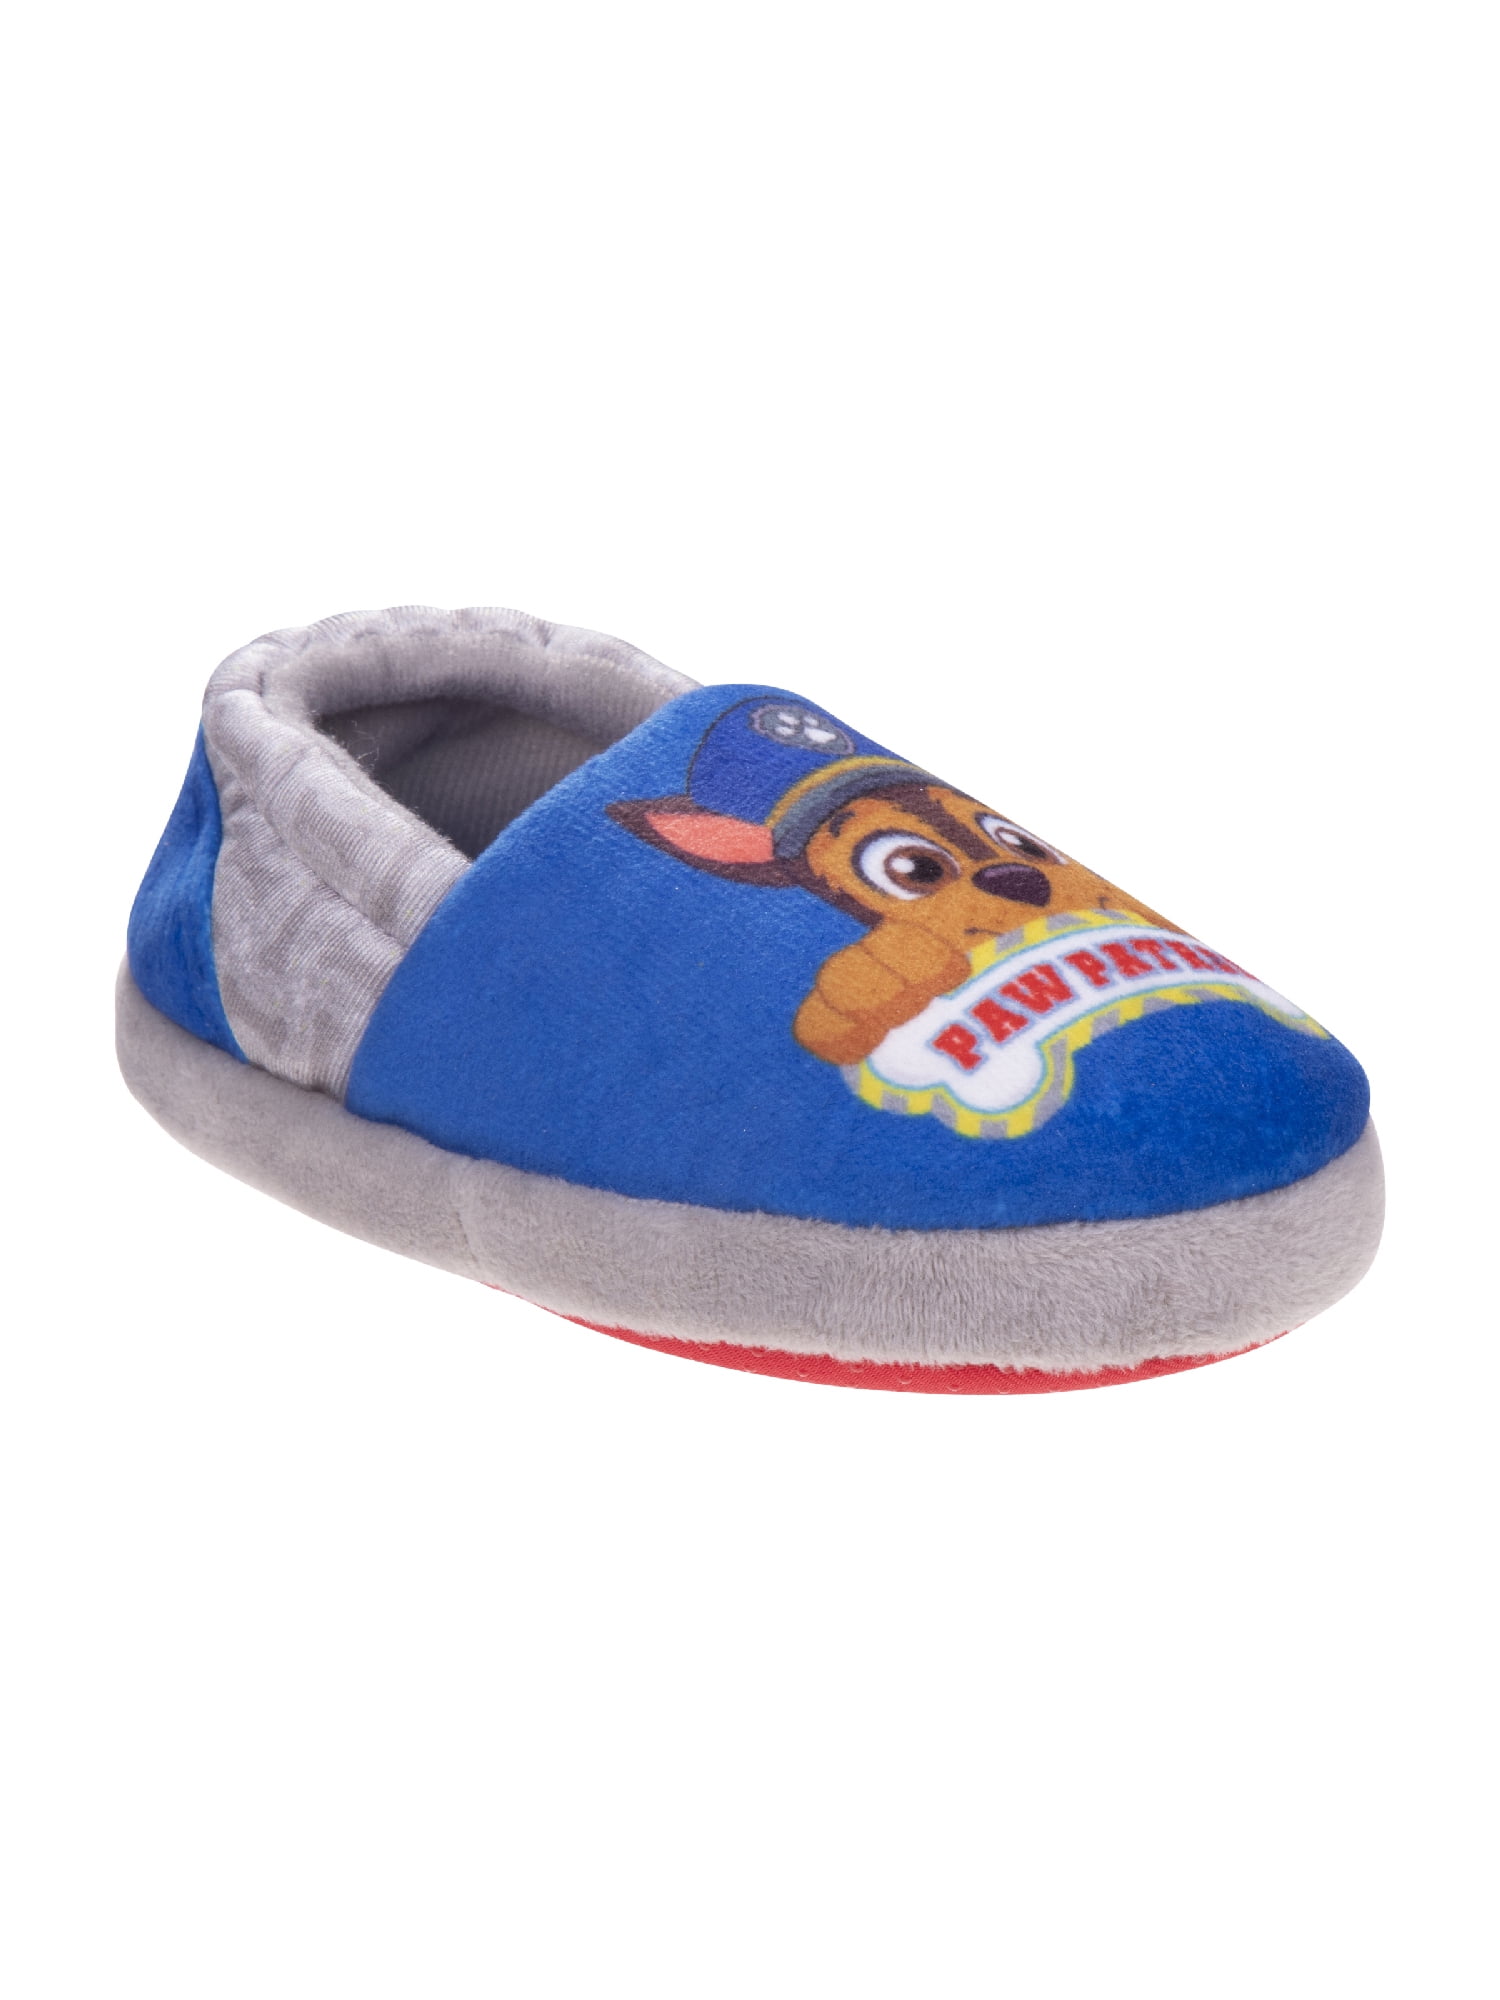 walmart paw patrol slippers